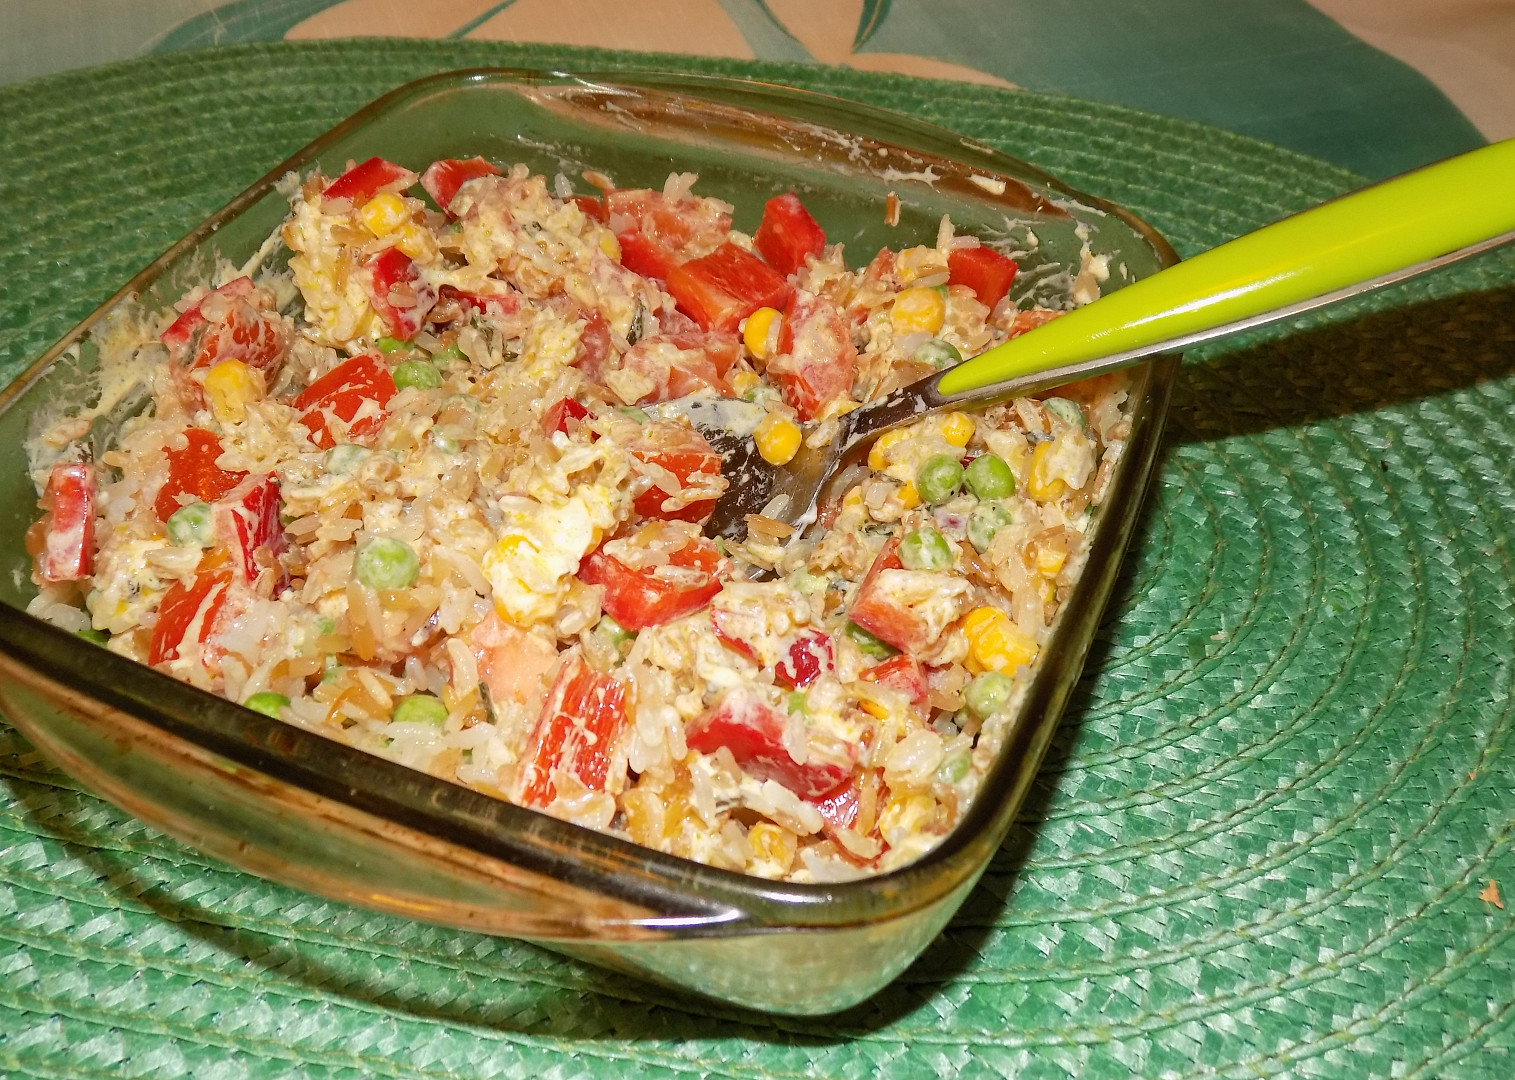 Rýžový salát s kari zálivkou